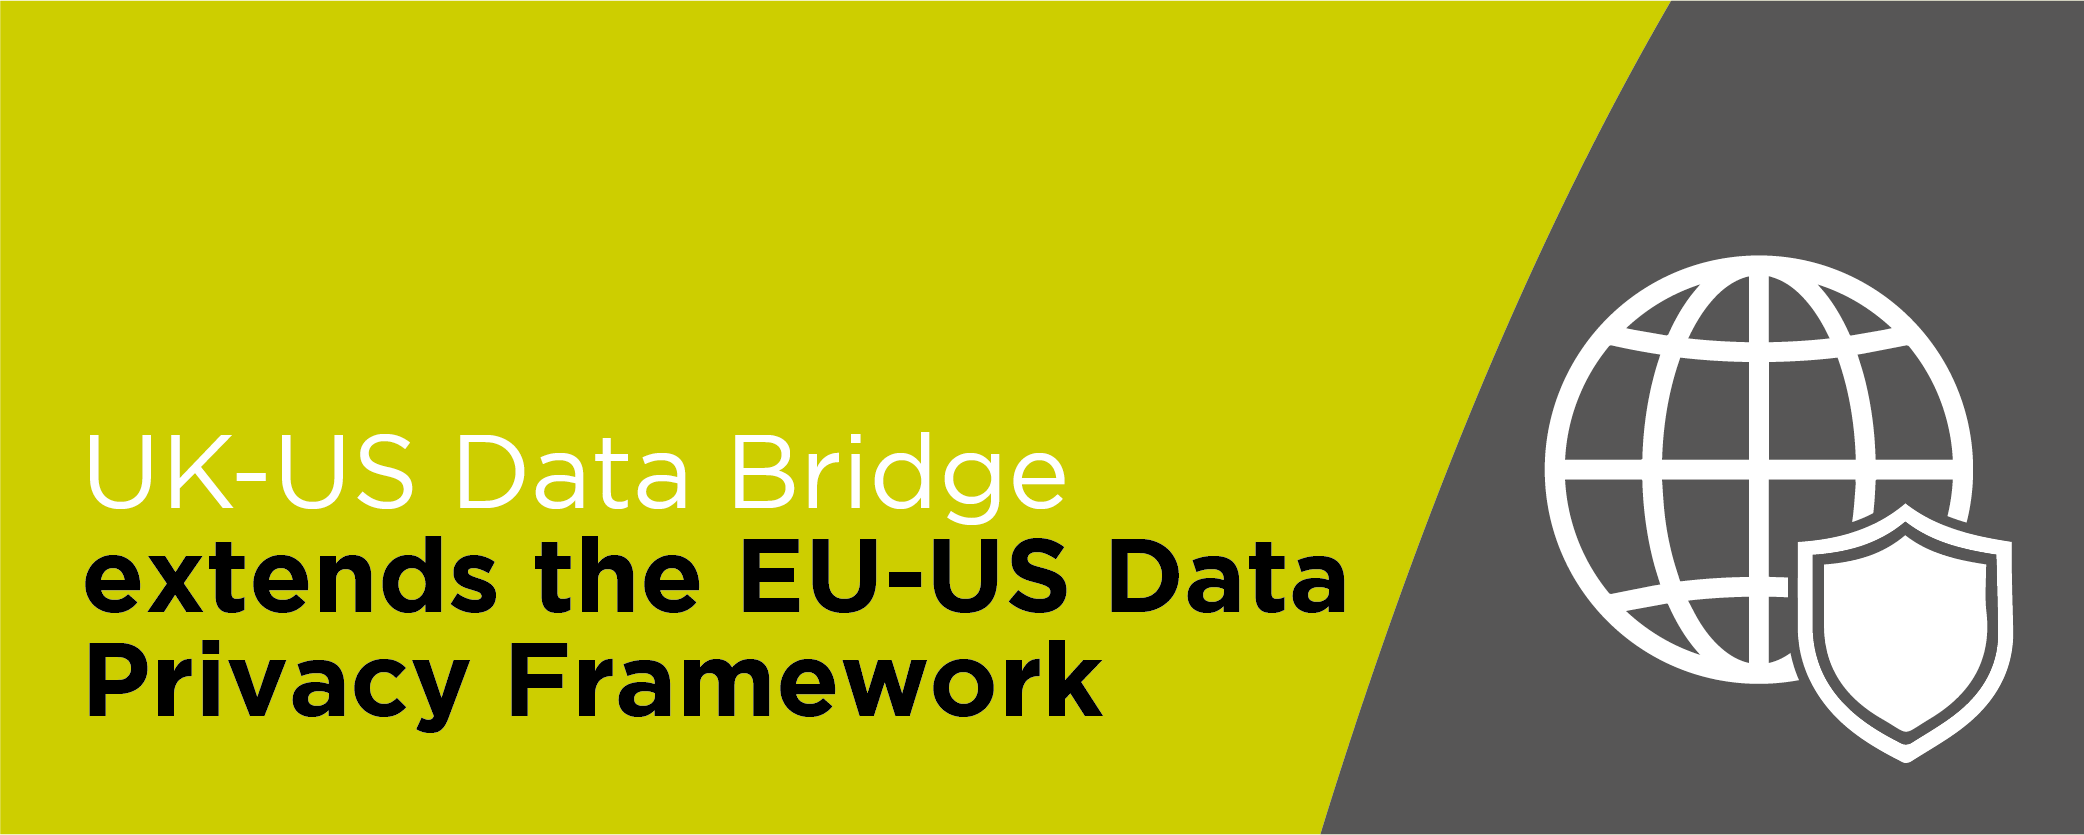 UK-US Data Bridge extends the EU-US Data Privacy Framework